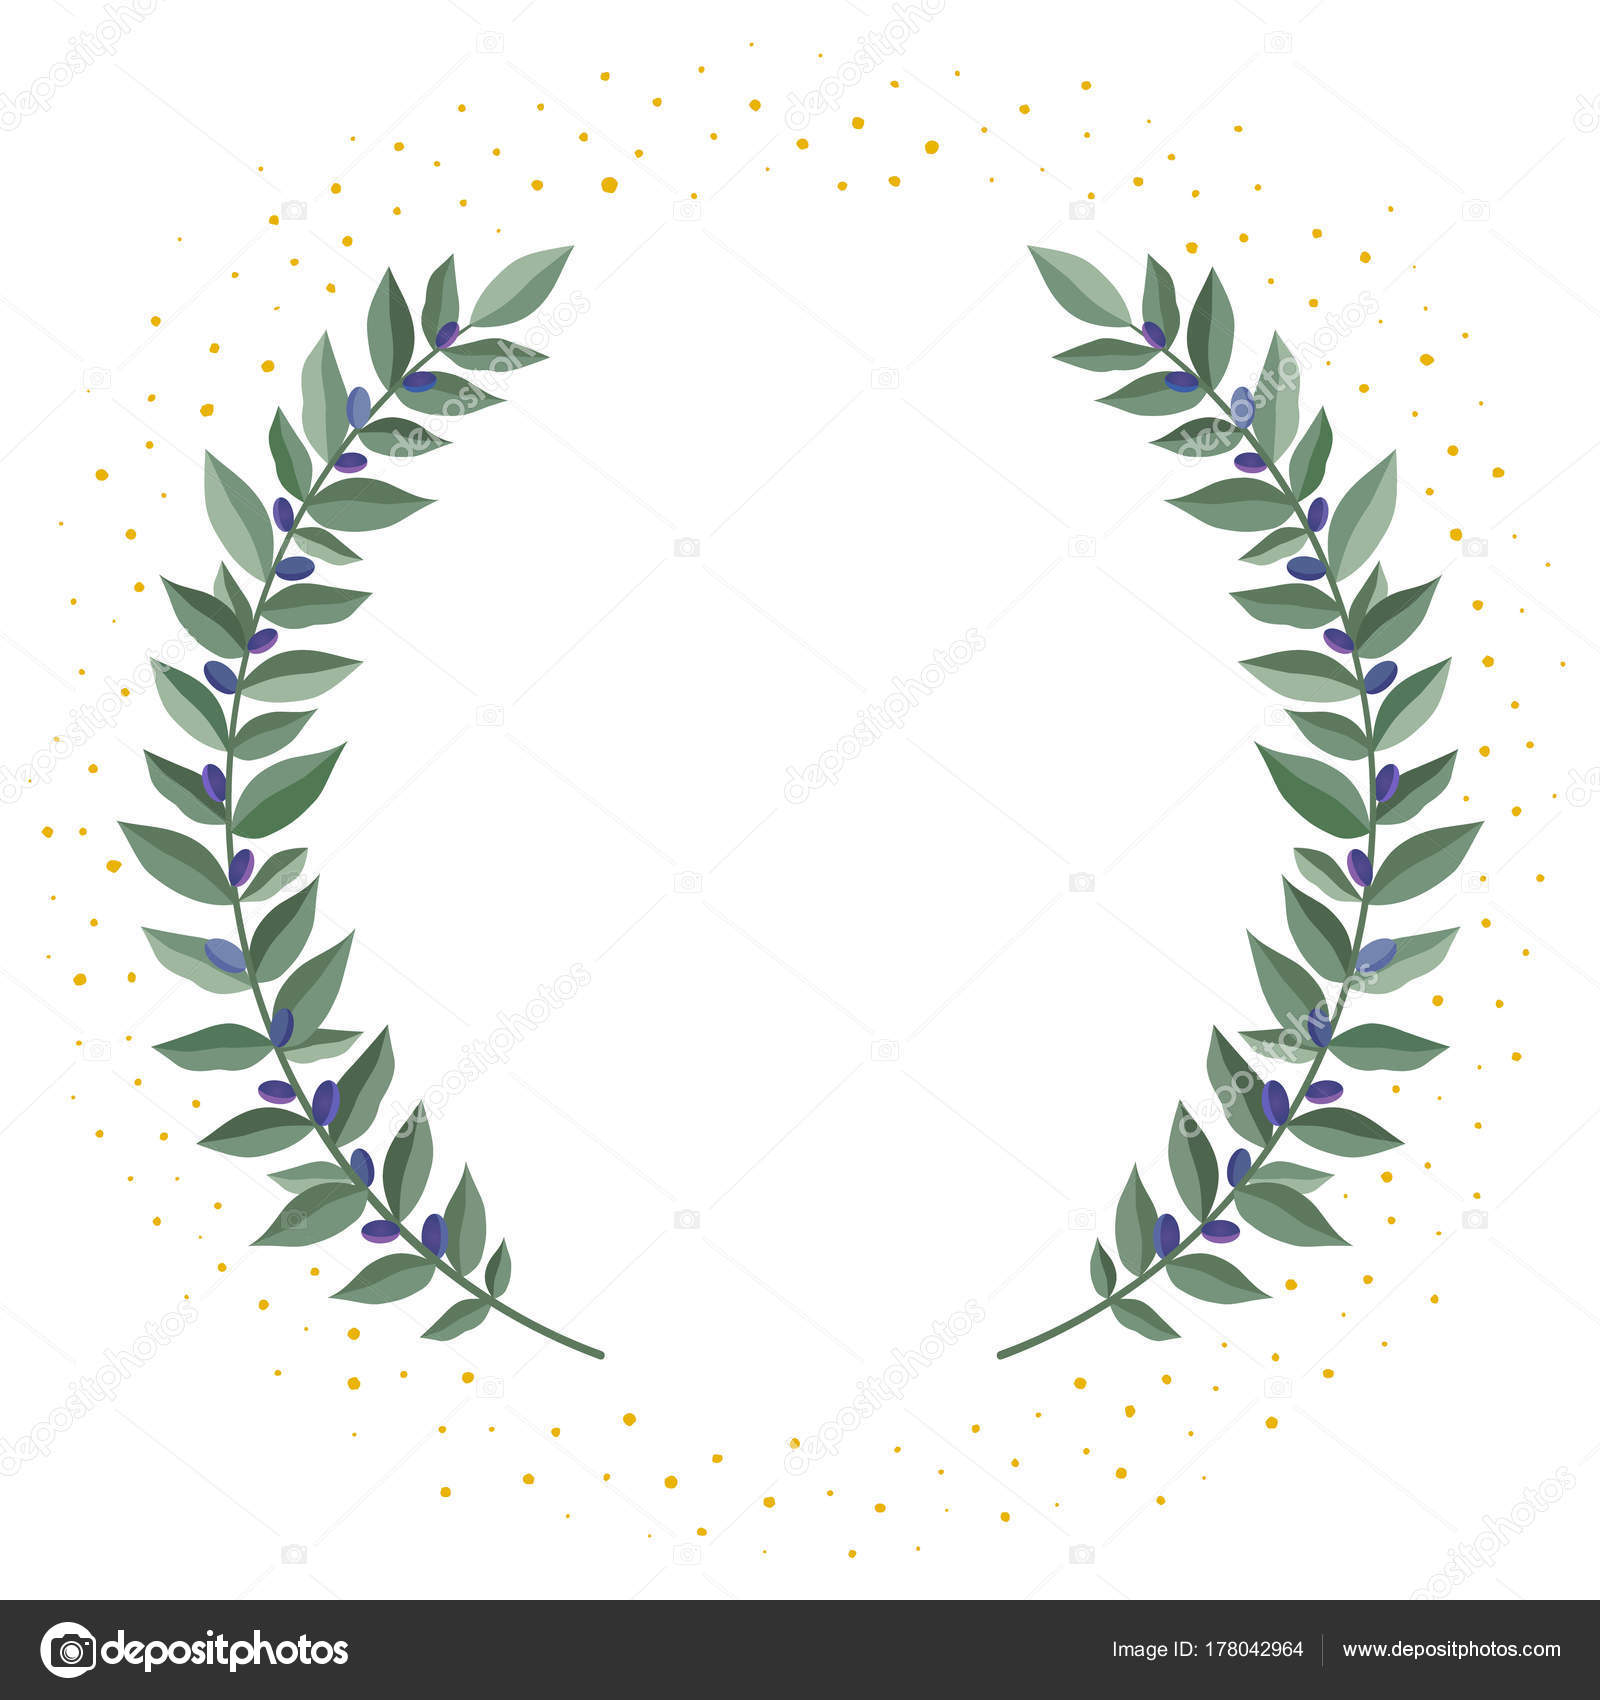 Digital Green Vines Clip Art. Green Laurel Wreath and Leaves